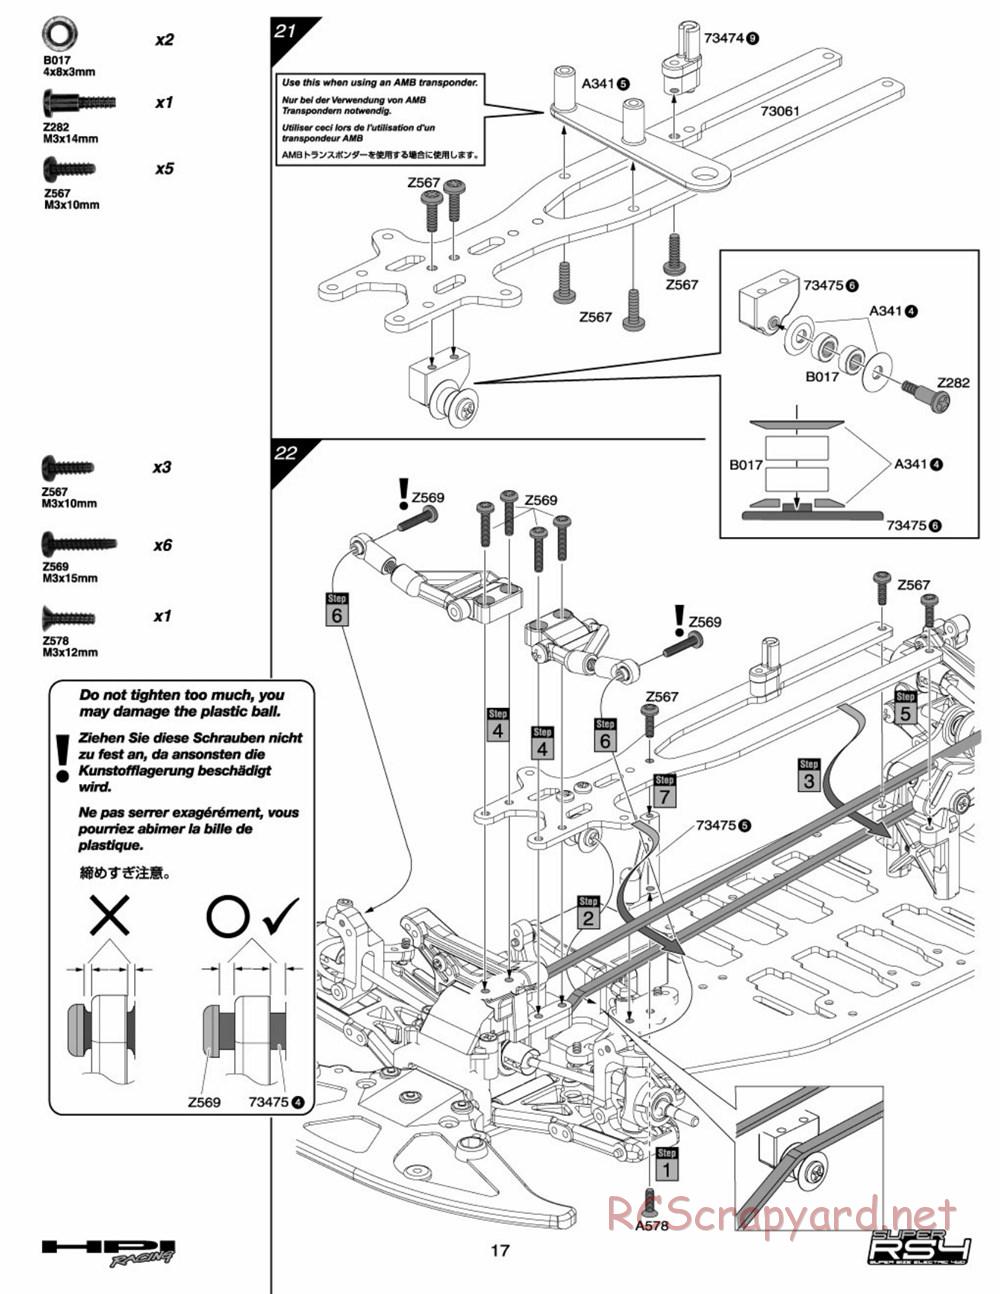 HPI - Super RS4 - Manual - Page 16